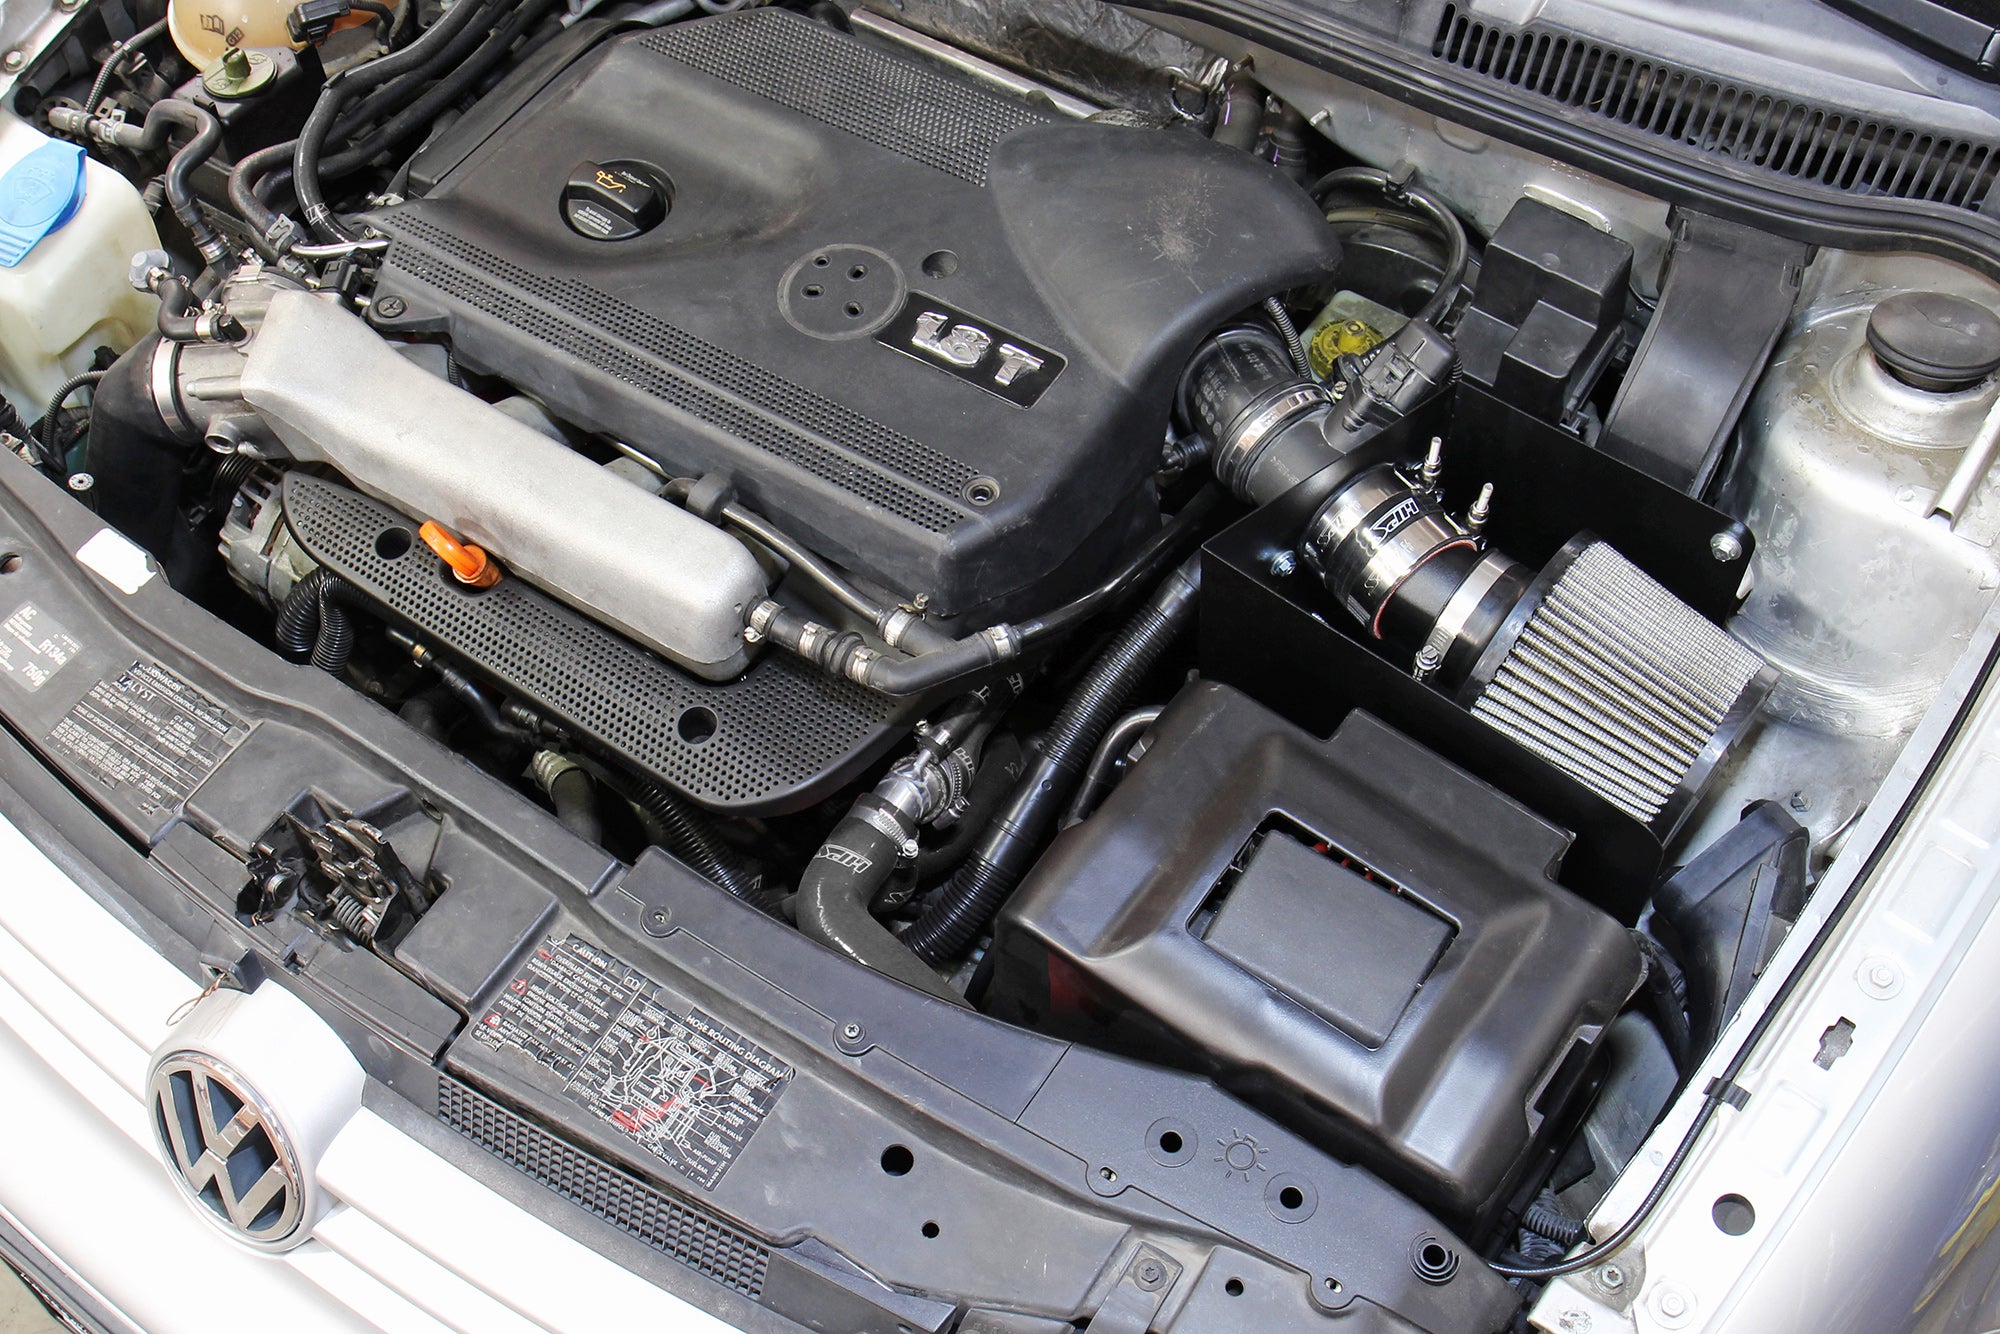 HPS Cold Air Intake Kit 827-685 installed 2000-2006 Volkswagen Golf GTI MK4 1.8T Turbo